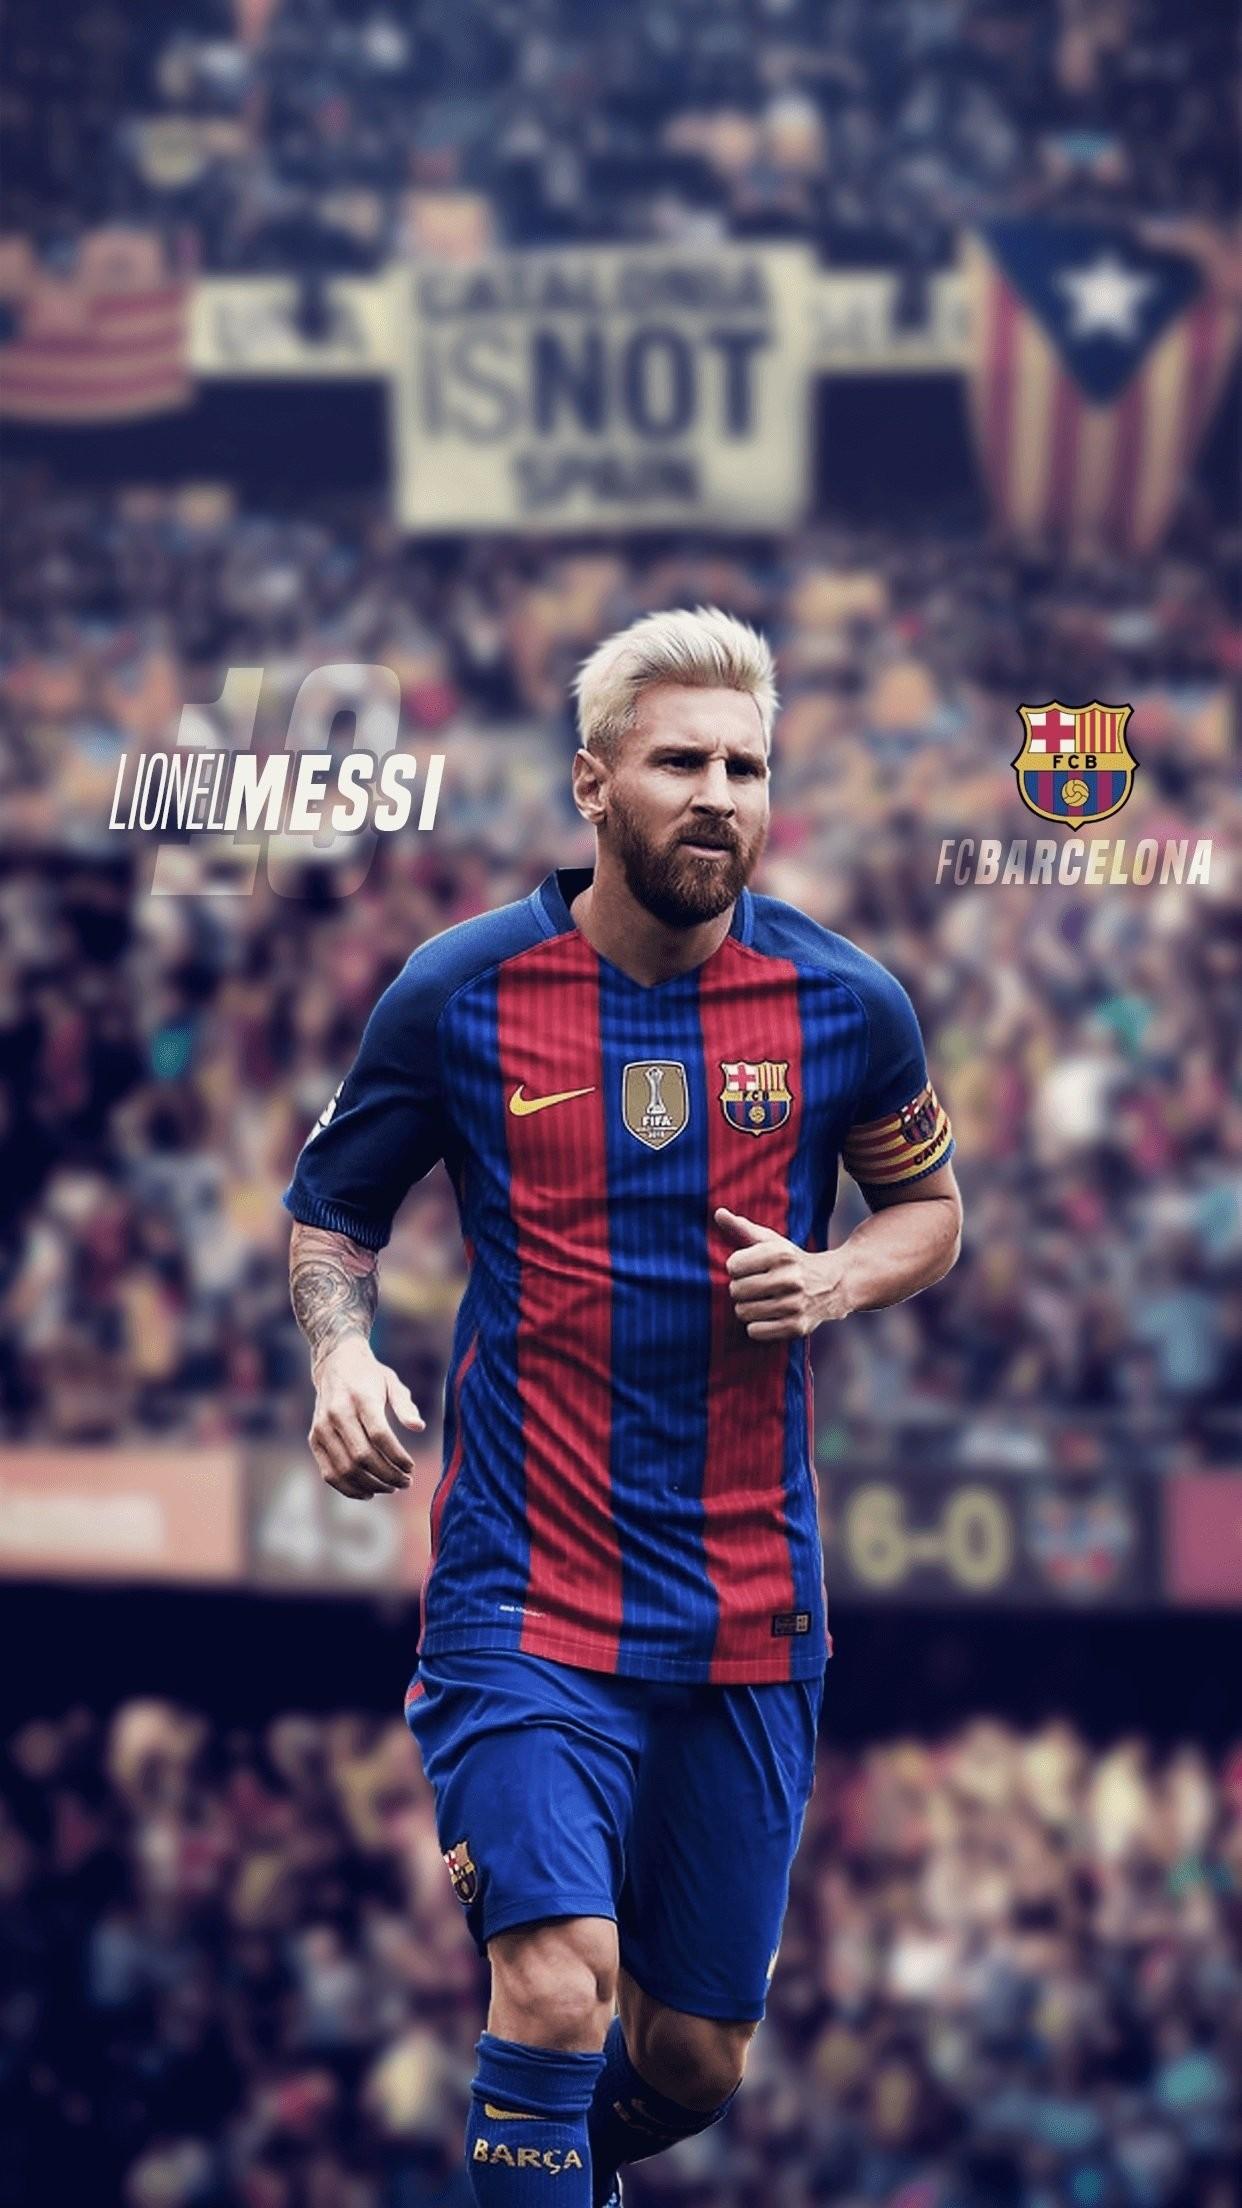 Lionel Messi Wallpaper 2017 background picture